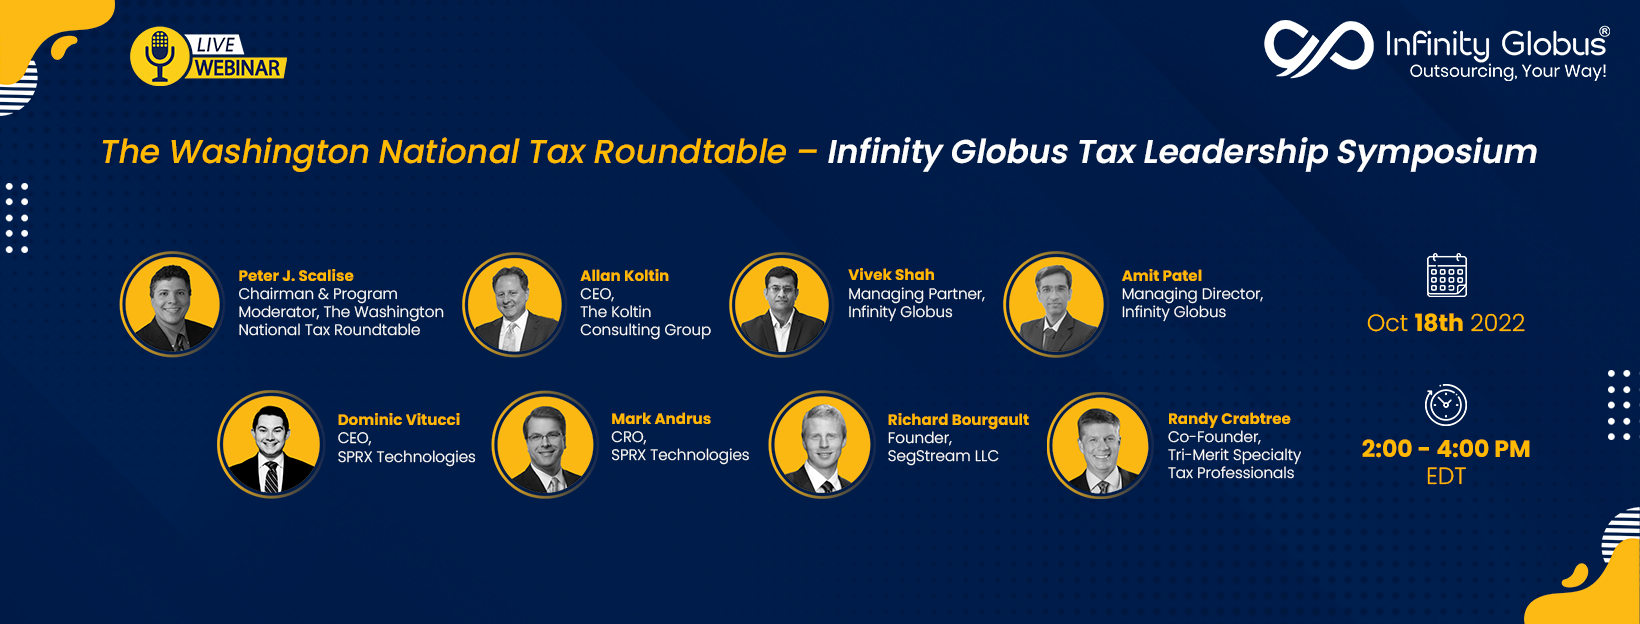 The Washington National Tax Roundtable – Infinity Globus Tax Leadership Symposium, Online Event